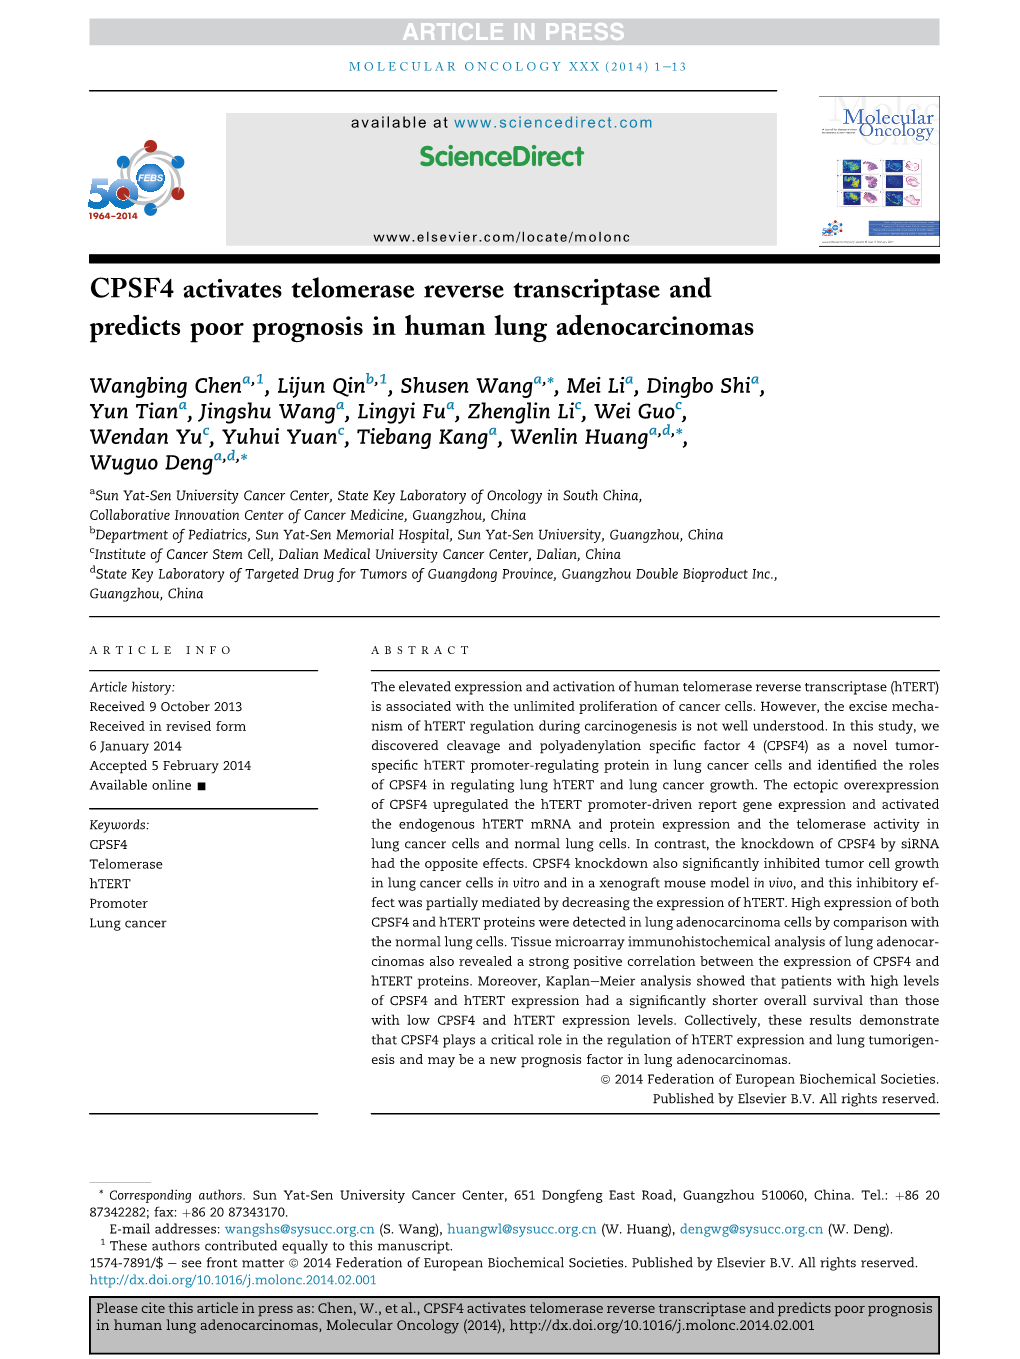 CPSF4 Activates Telomerase Reverse Transcriptase and Predicts Poor Prognosis in Human Lung Adenocarcinomas